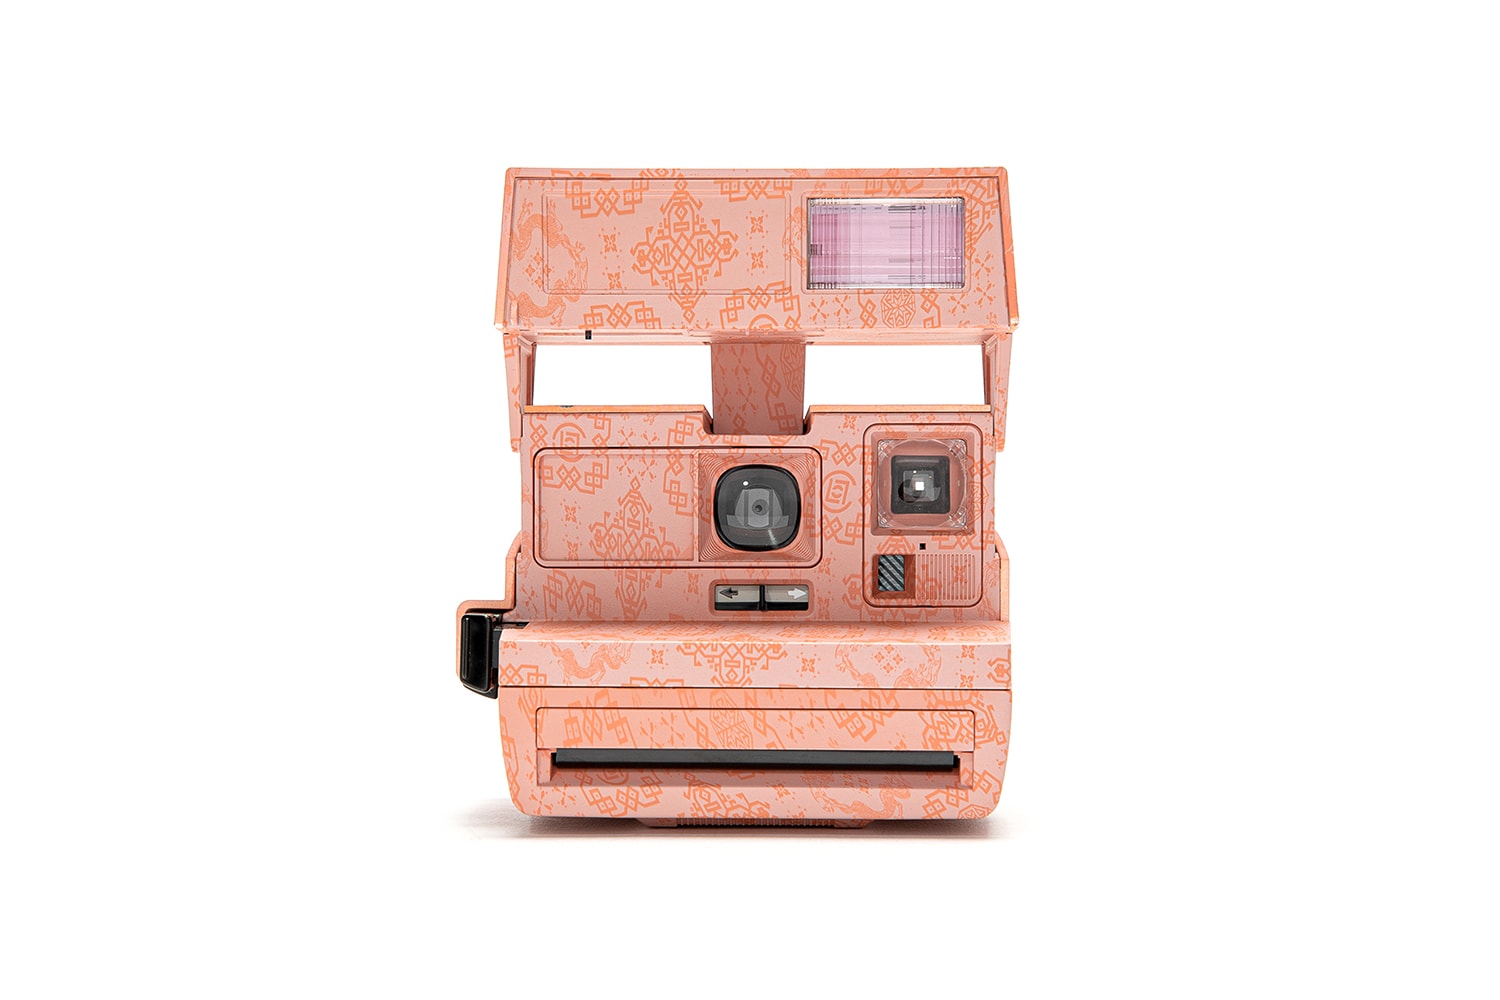 CLOT x Polaroid 600 Silk Royale Collection info Edison Chen Splash color Flash Instant Film Hong Kong Juice Store 